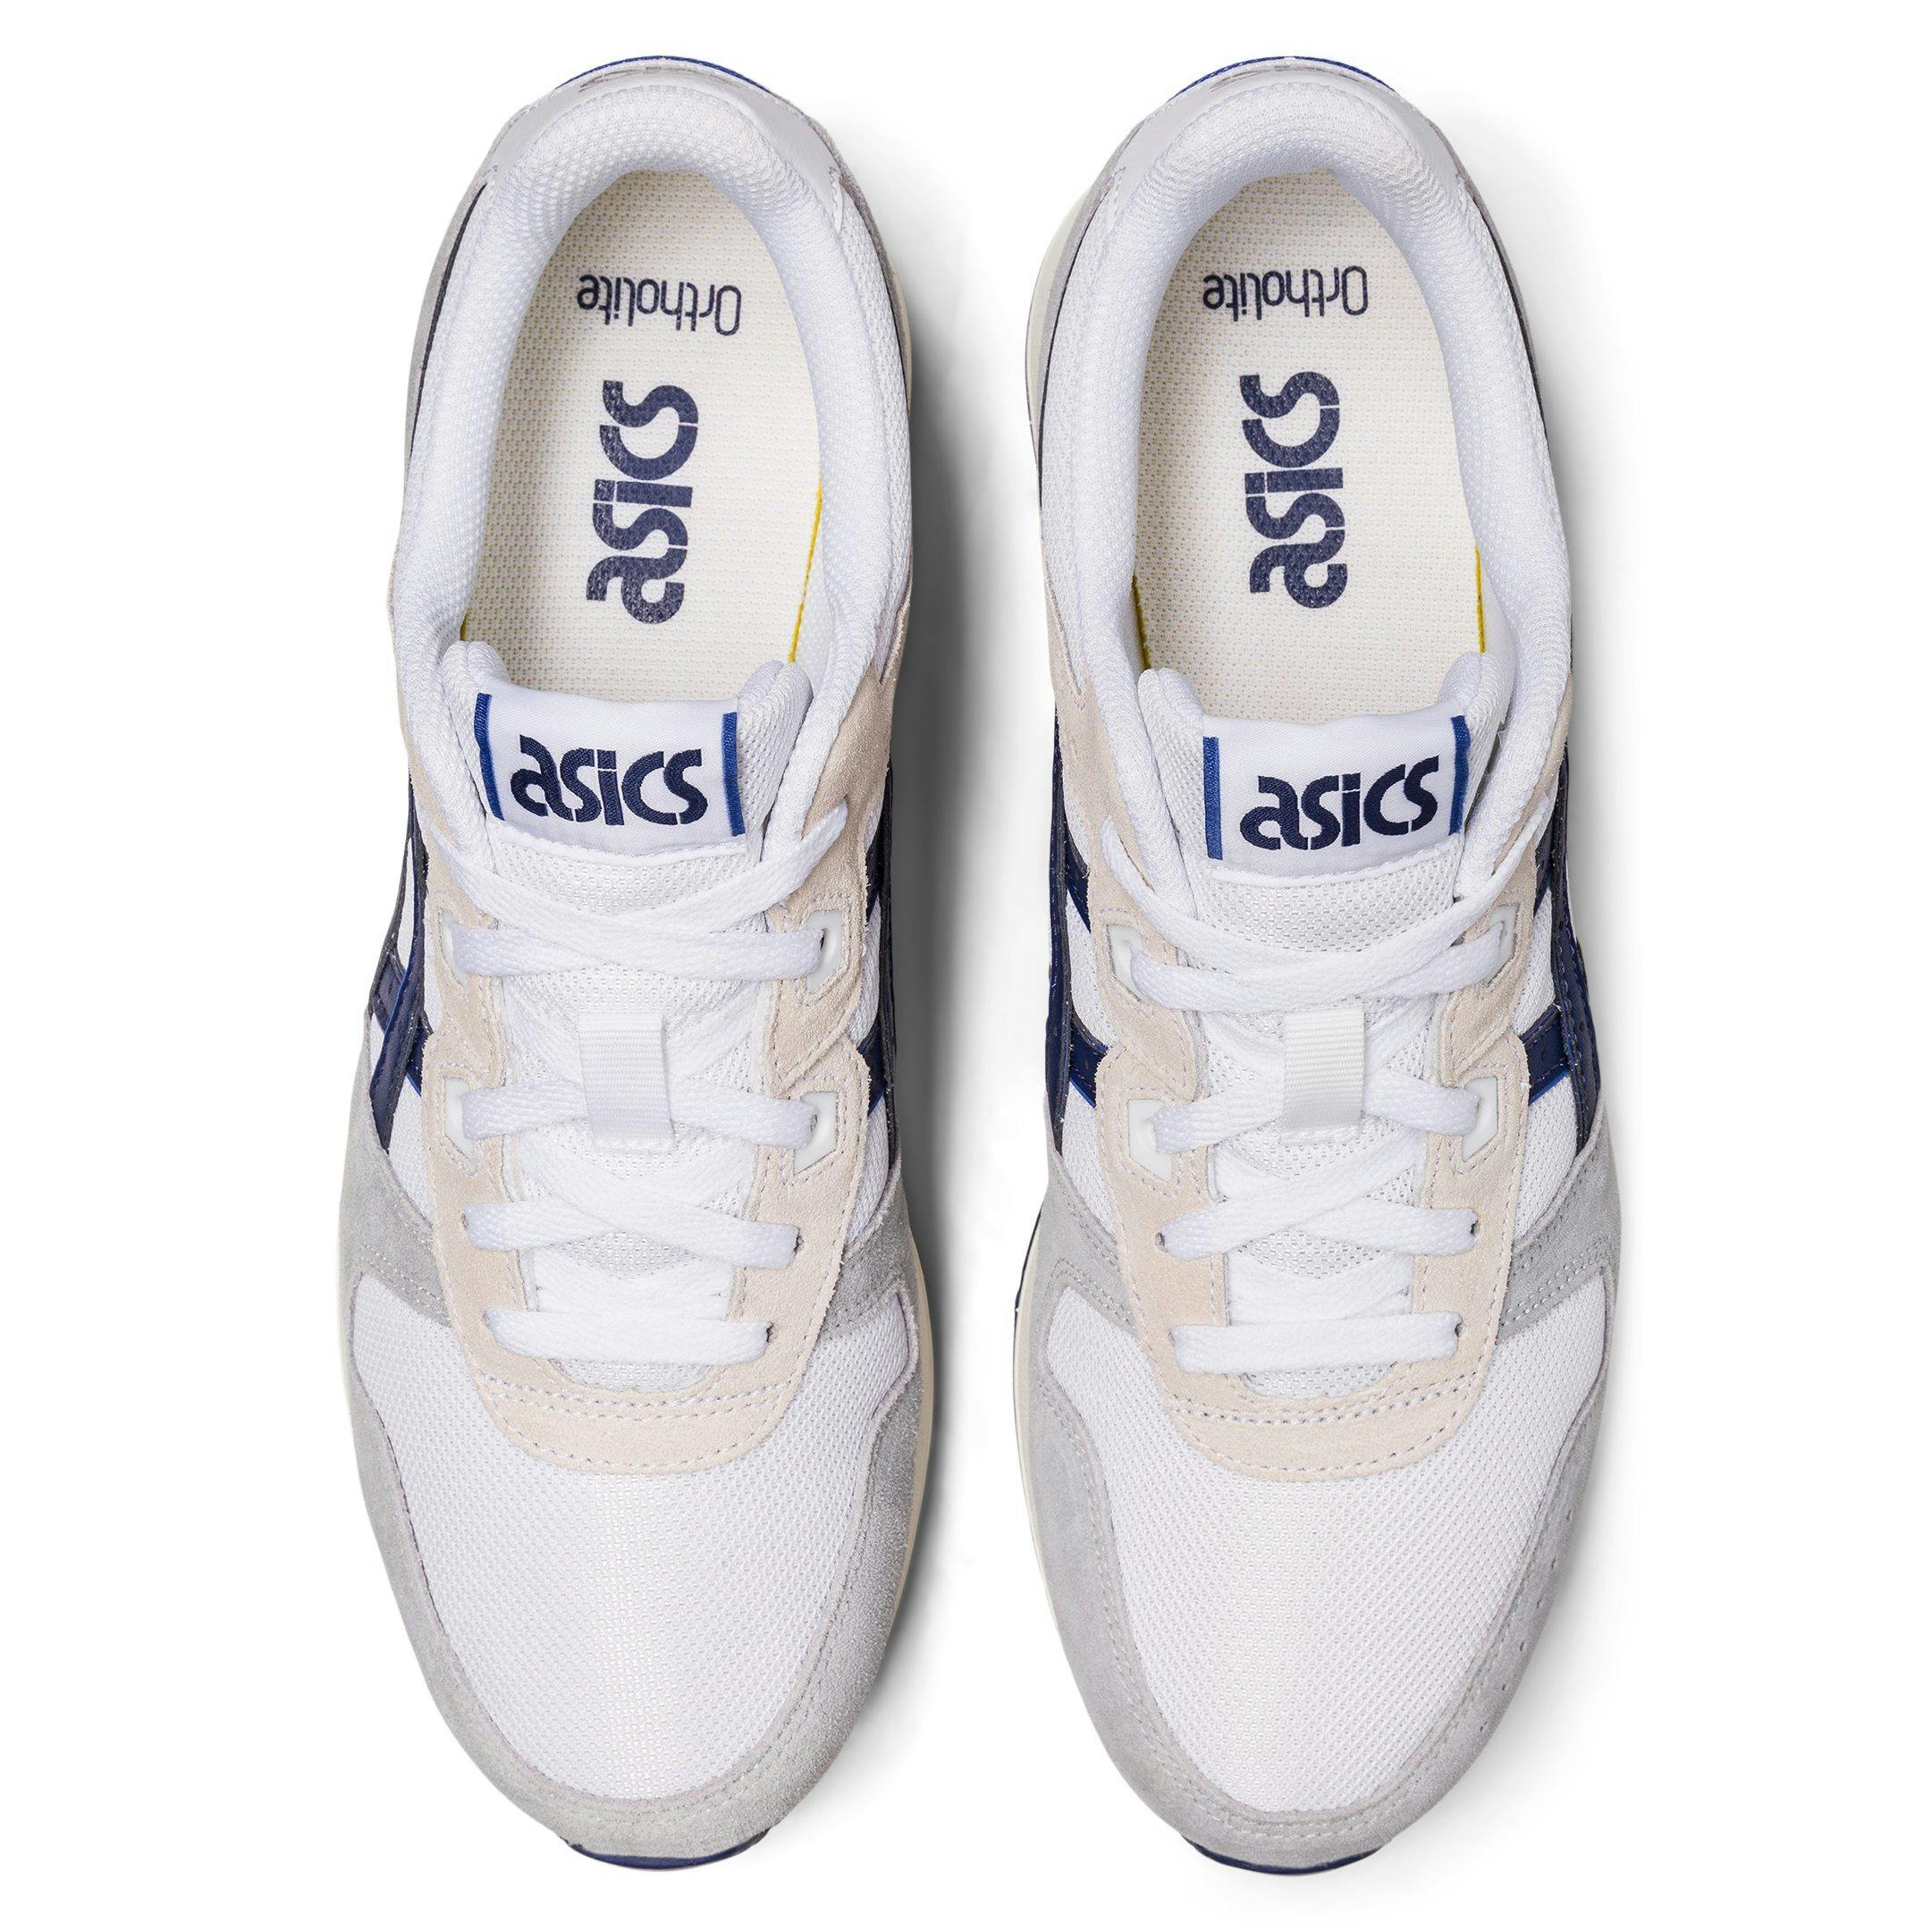 Asics Lyte Classic Sneaker - White/Indigo Blue | Casual Sneakers | Huckberry